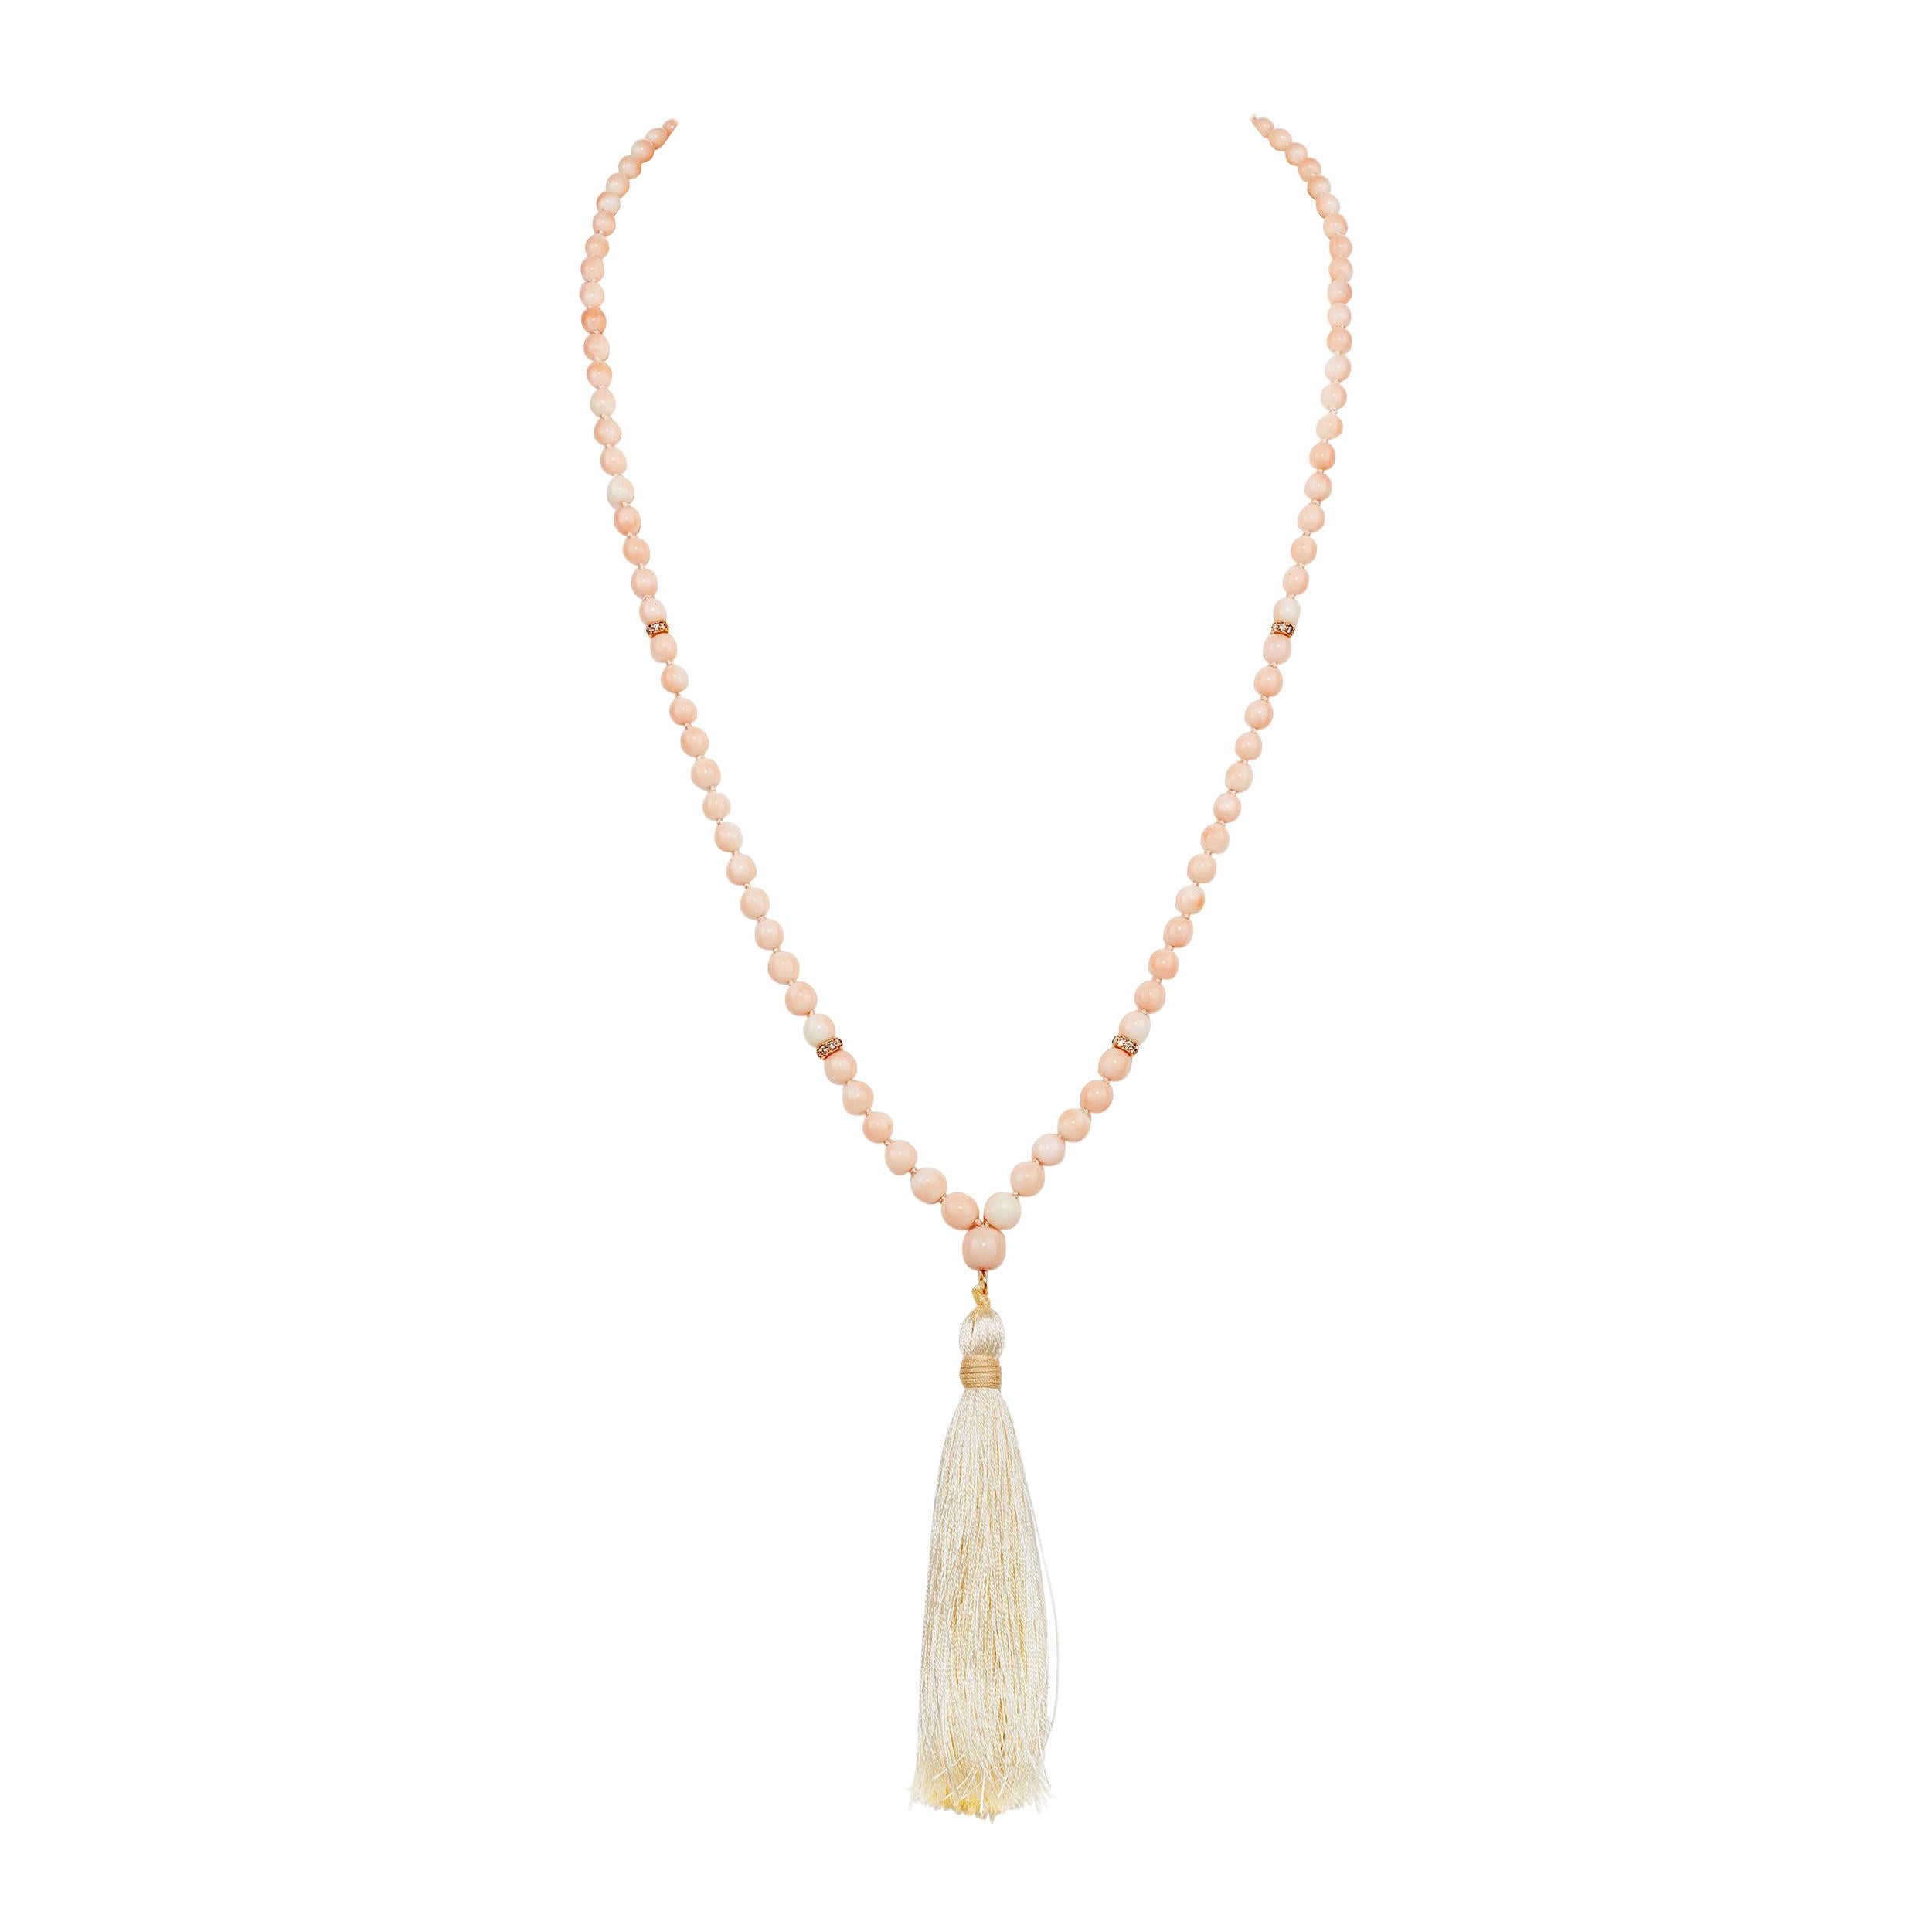 Vintage Angel Skin Coral, Diamond Mala / Prayer / Meditation Necklace in 18k YG